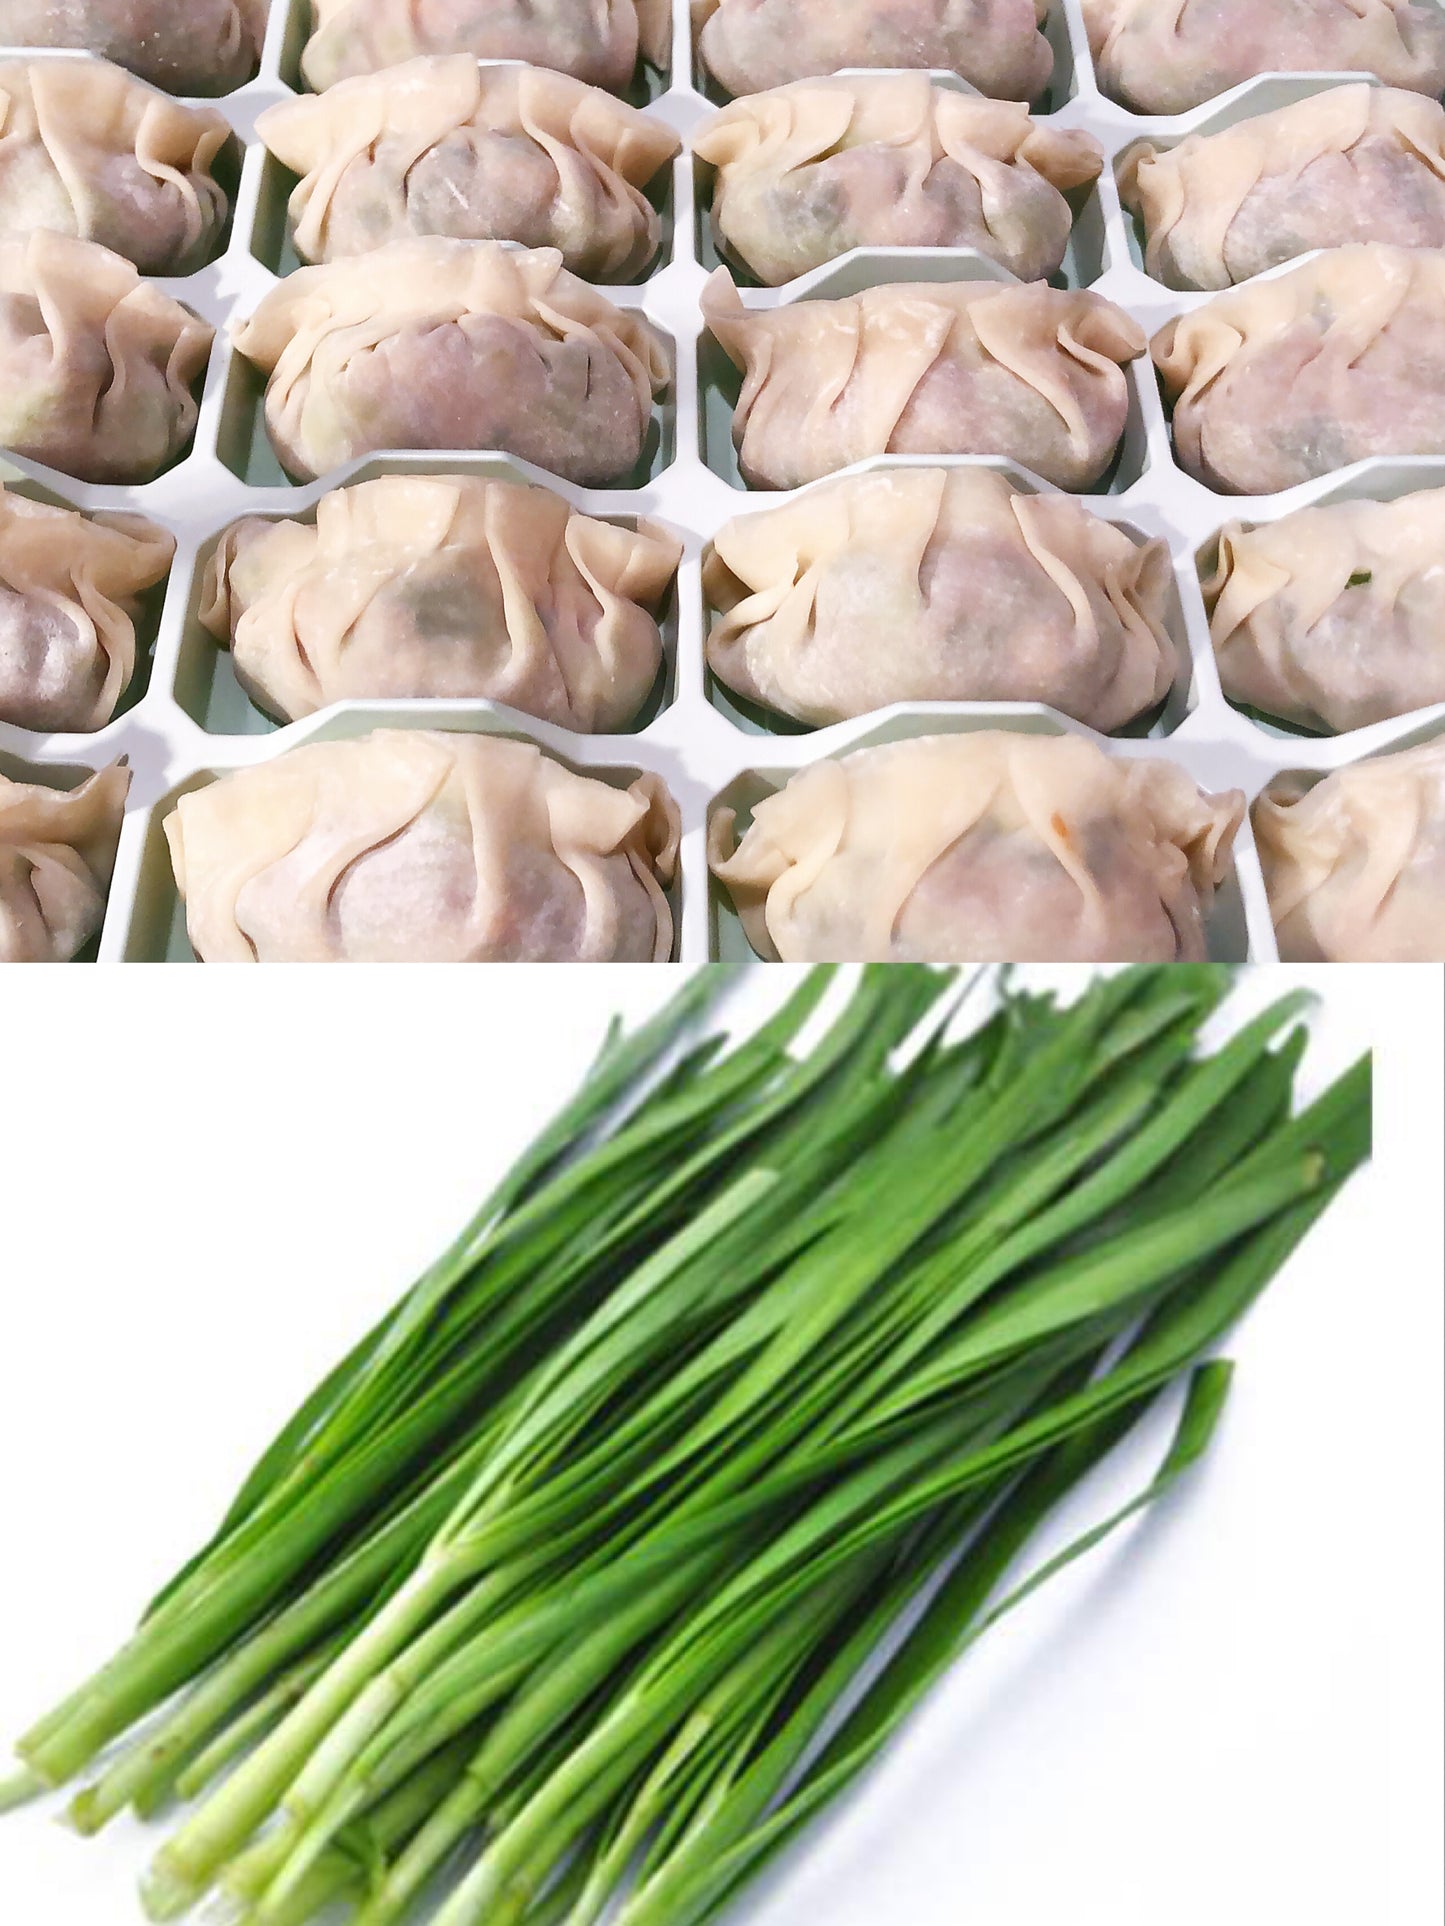 Berkshire Pork Dumpling 20 pieces(Chinese Chives) 全自然黑毛豬肉餃20隻（韭菜）